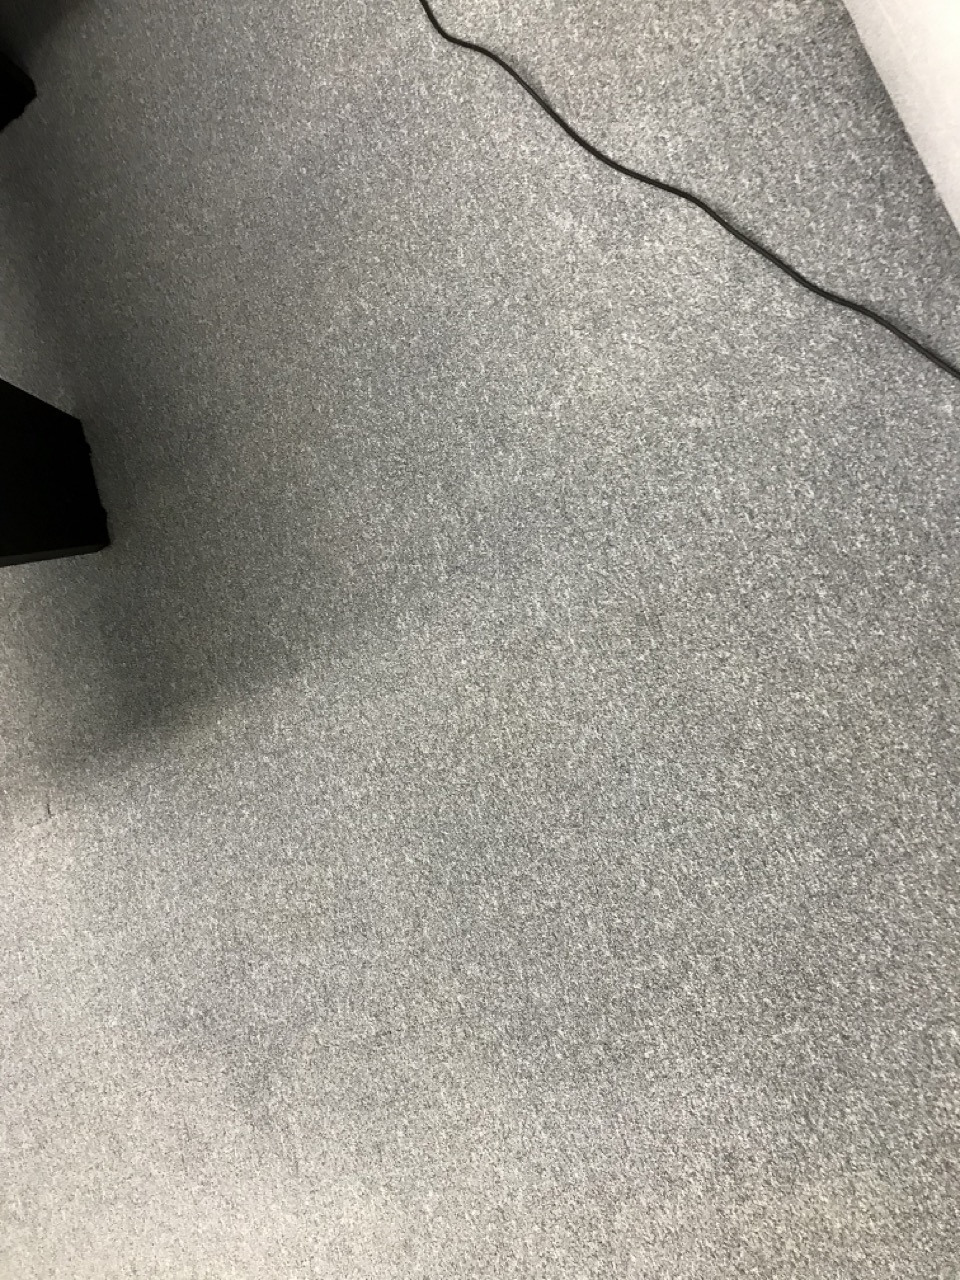 чистка офисного ковролина